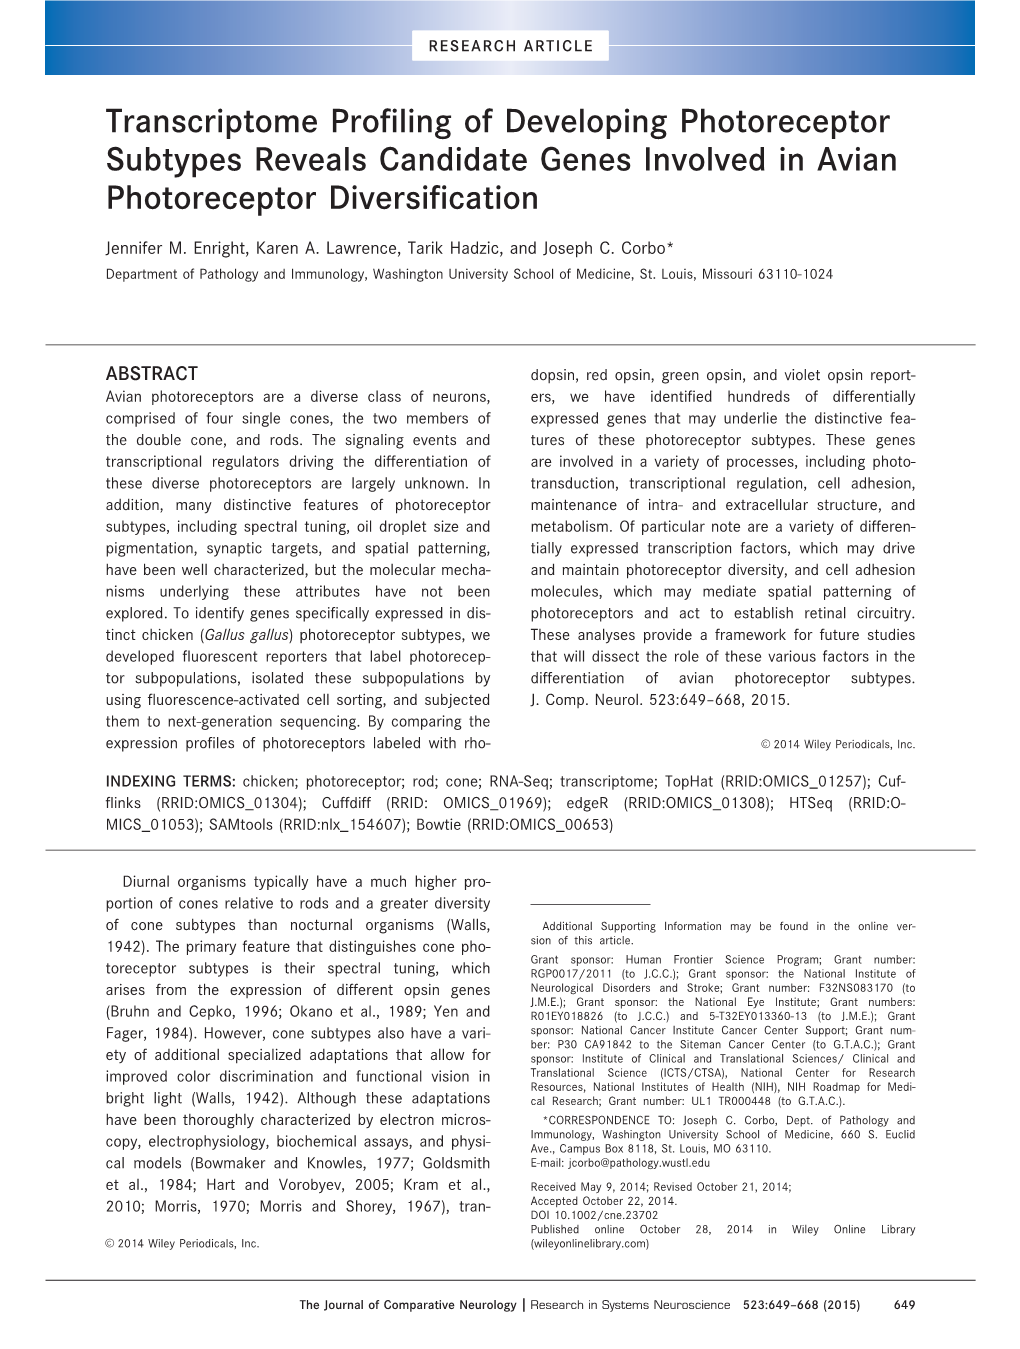 Transcriptome Profiling of Developing Photoreceptor Subtypes Reveals